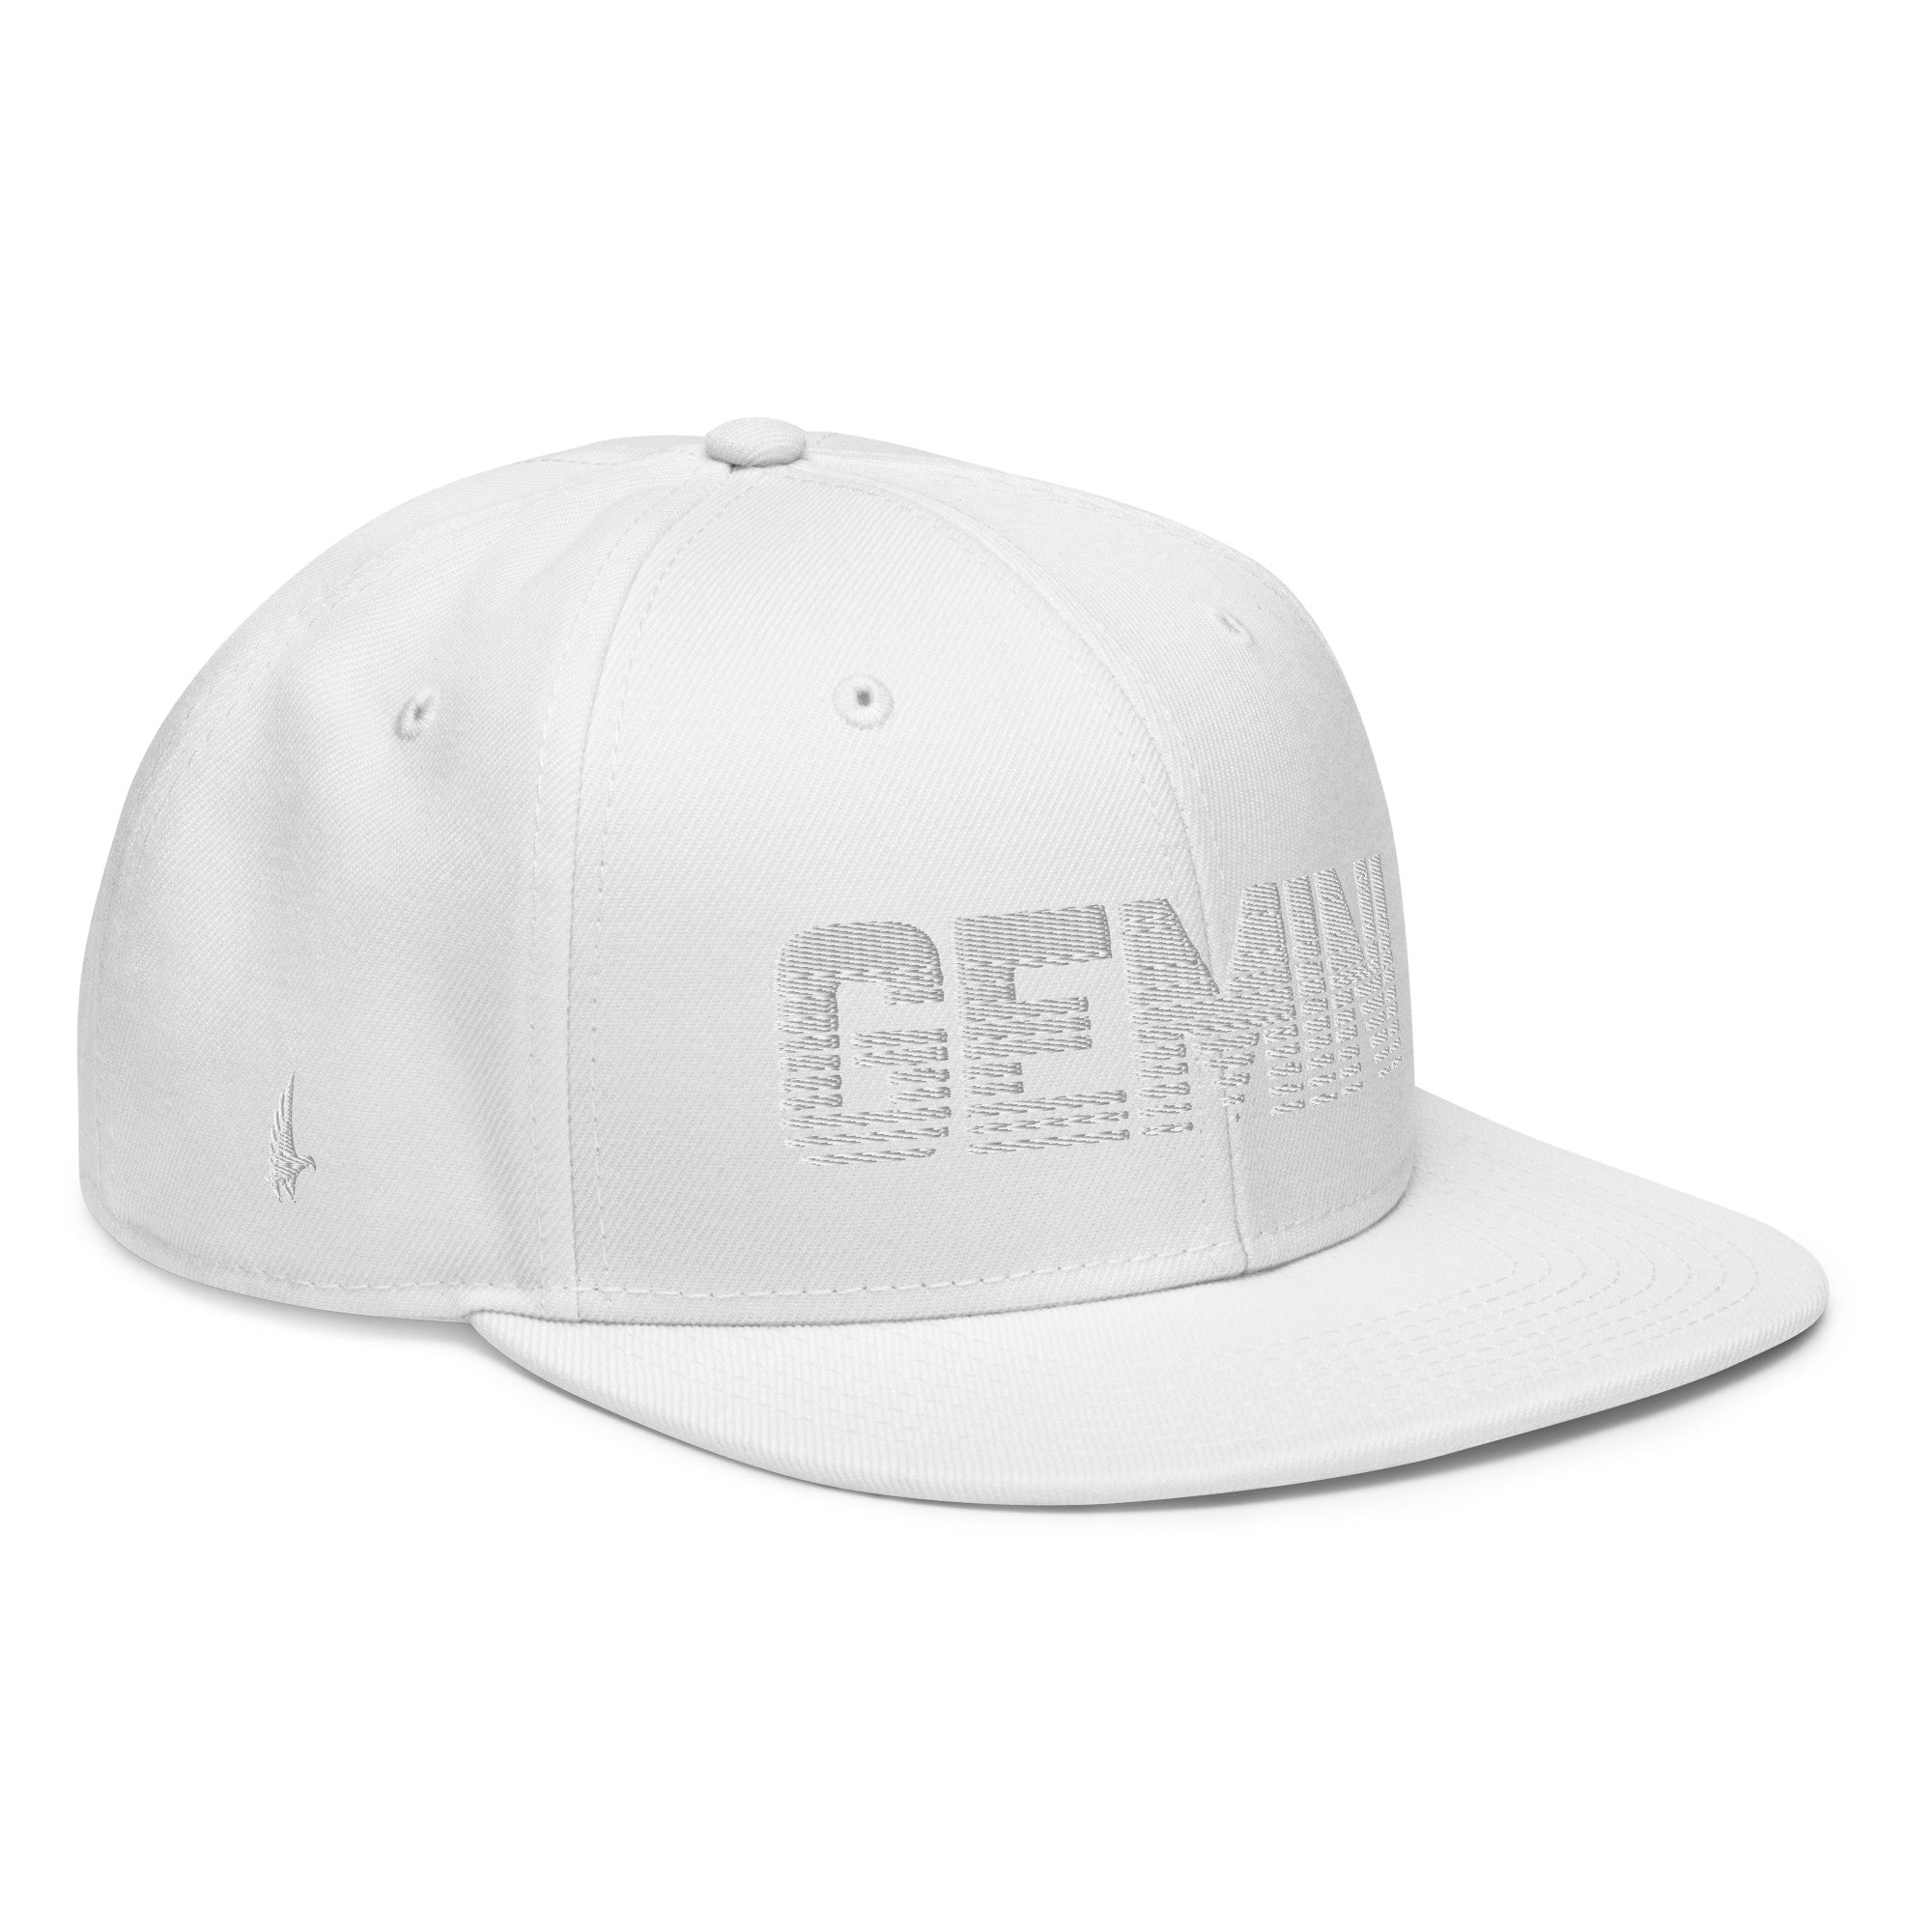 Gemini Snapback Hat - White / White - Loyalty Vibes